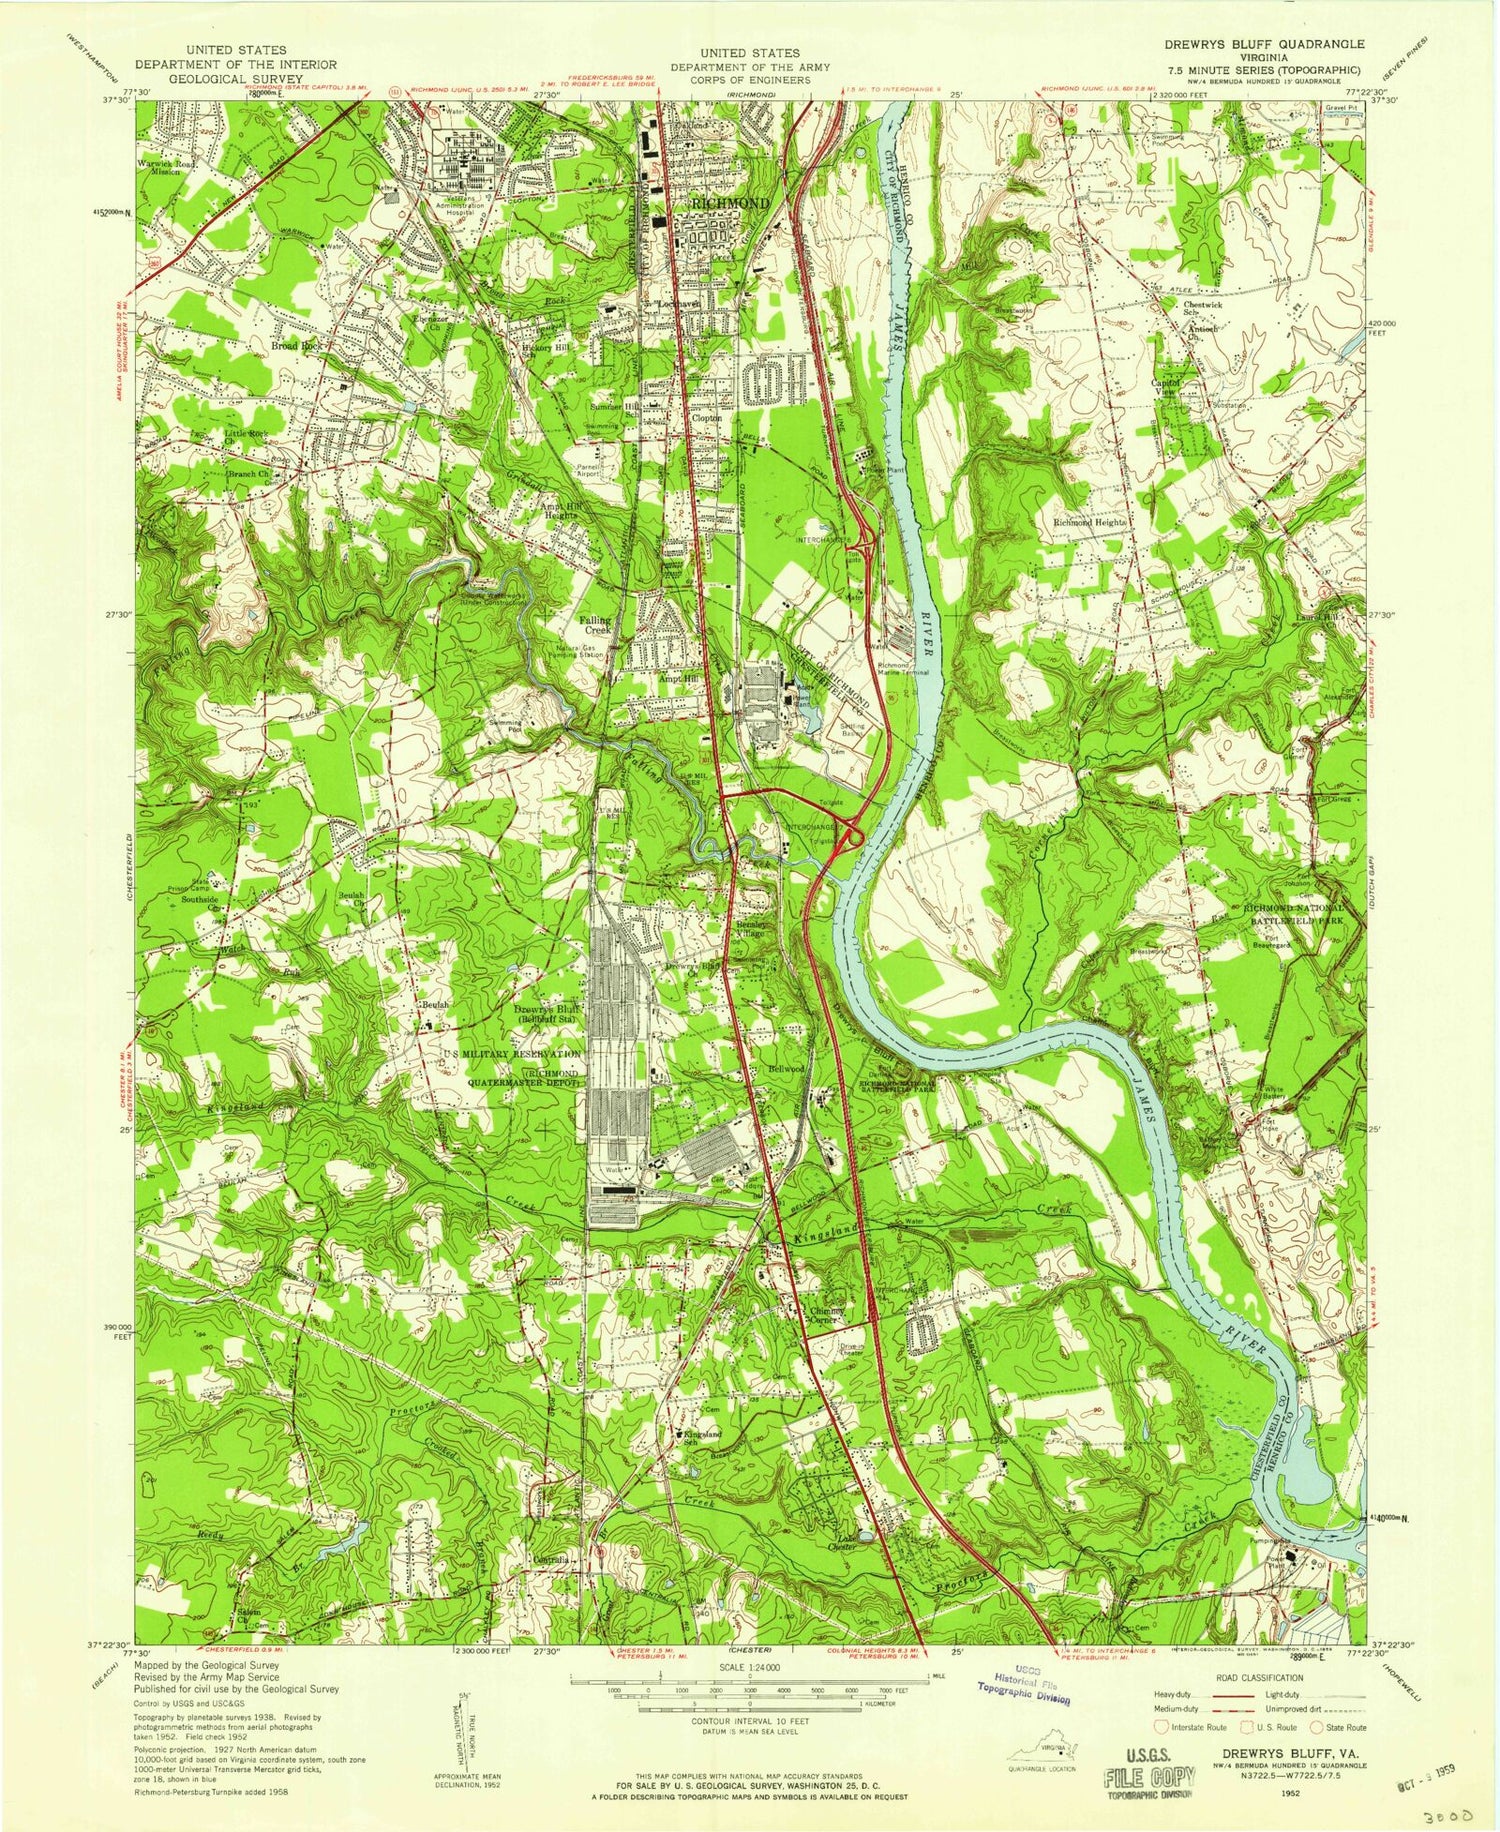 Classic USGS Drewrys Bluff Virginia 7.5'x7.5' Topo Map Image